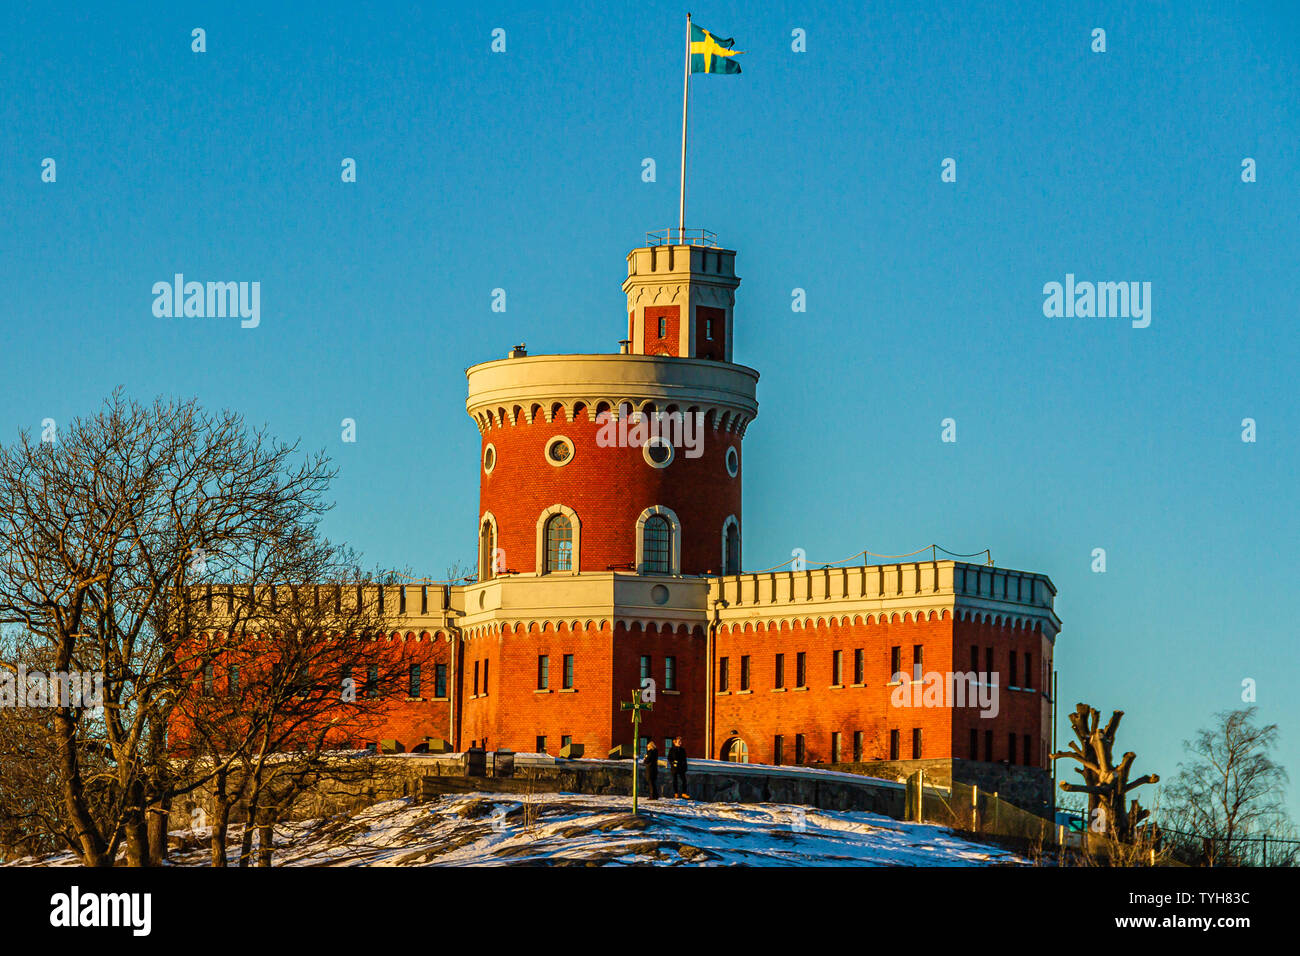 The 19th century Kastellet, a small castle or citadel on Kastellholmen island, Stockholm, Sweden. January 2019. Stock Photo